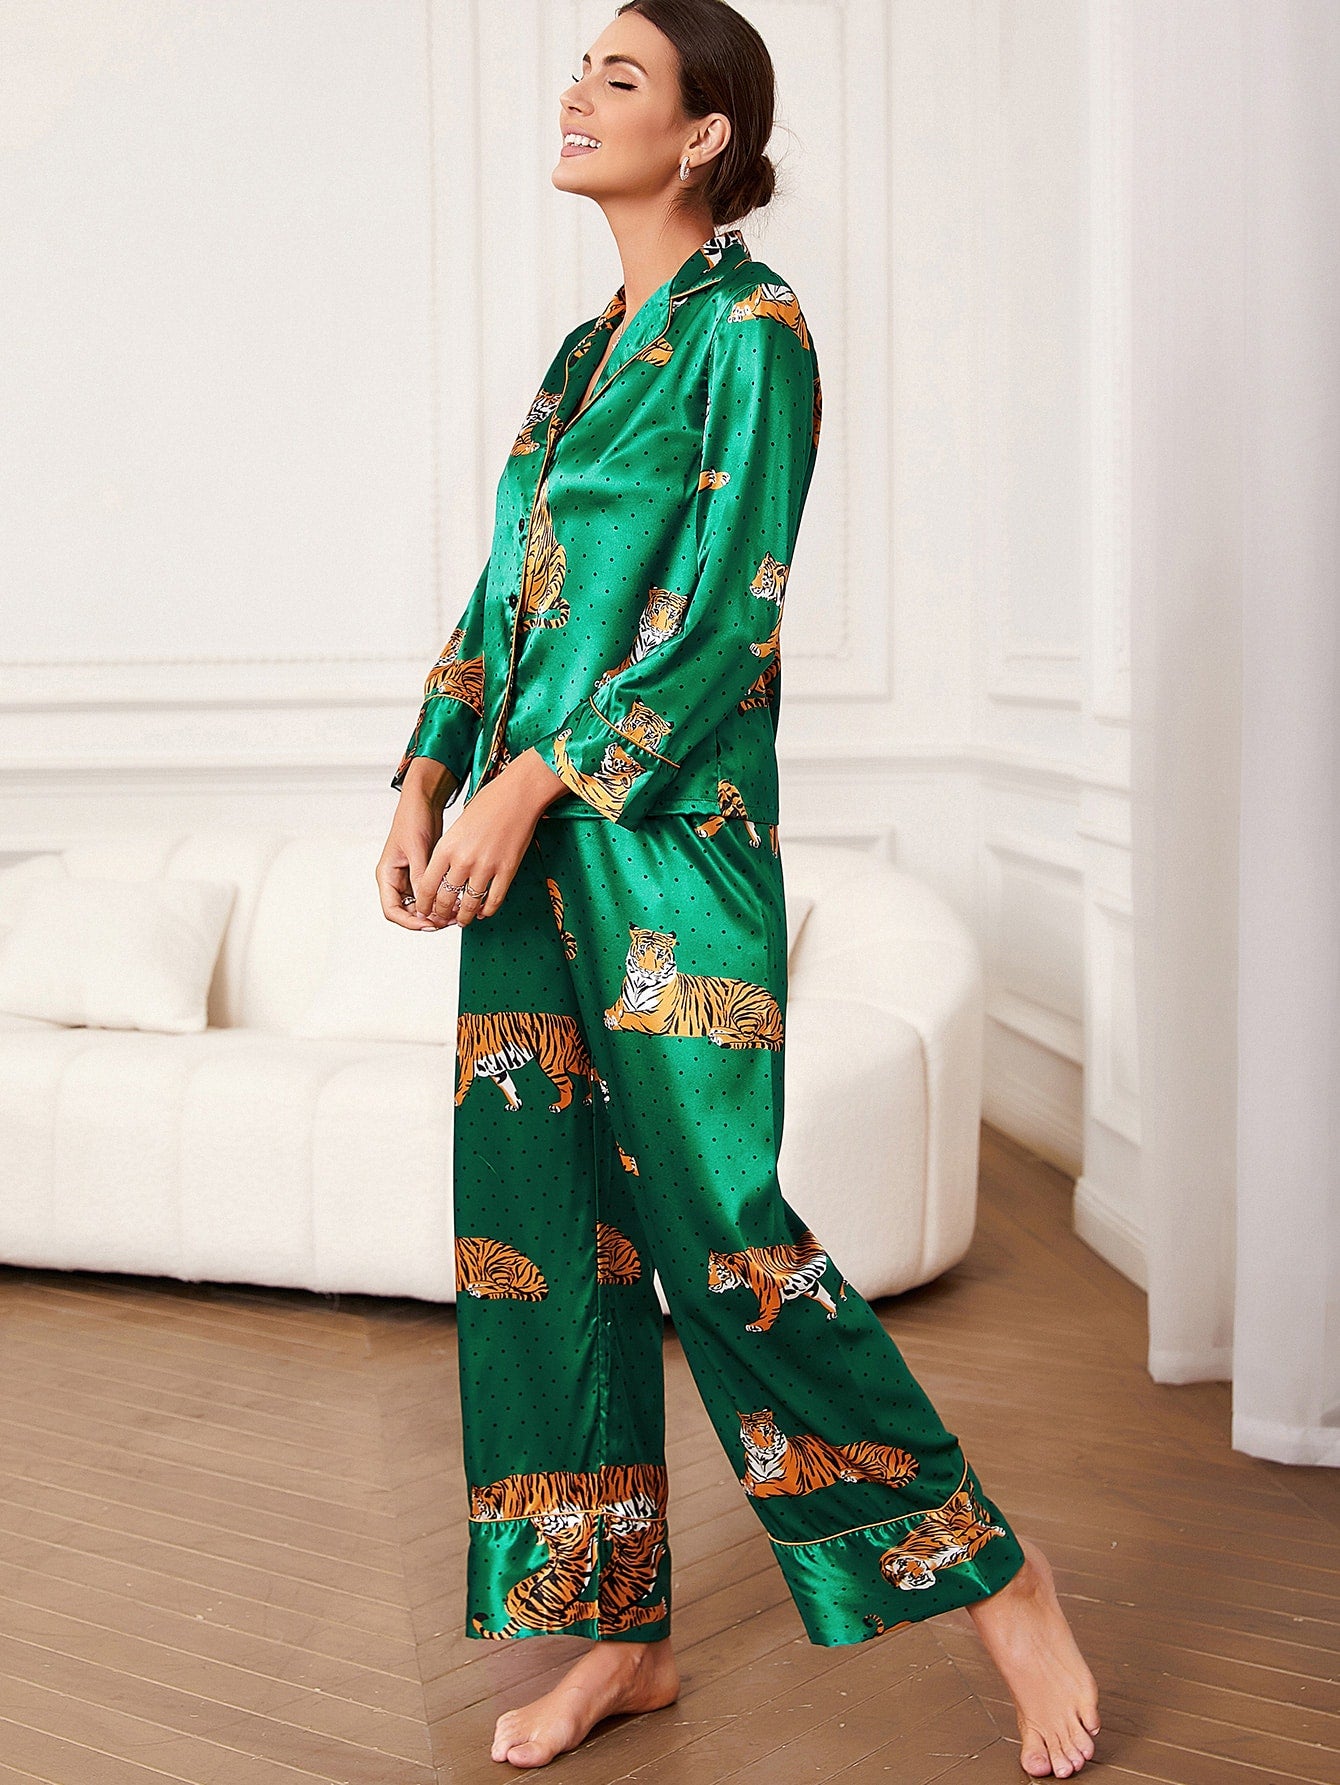 Tiger Print Satin Pyjama Set